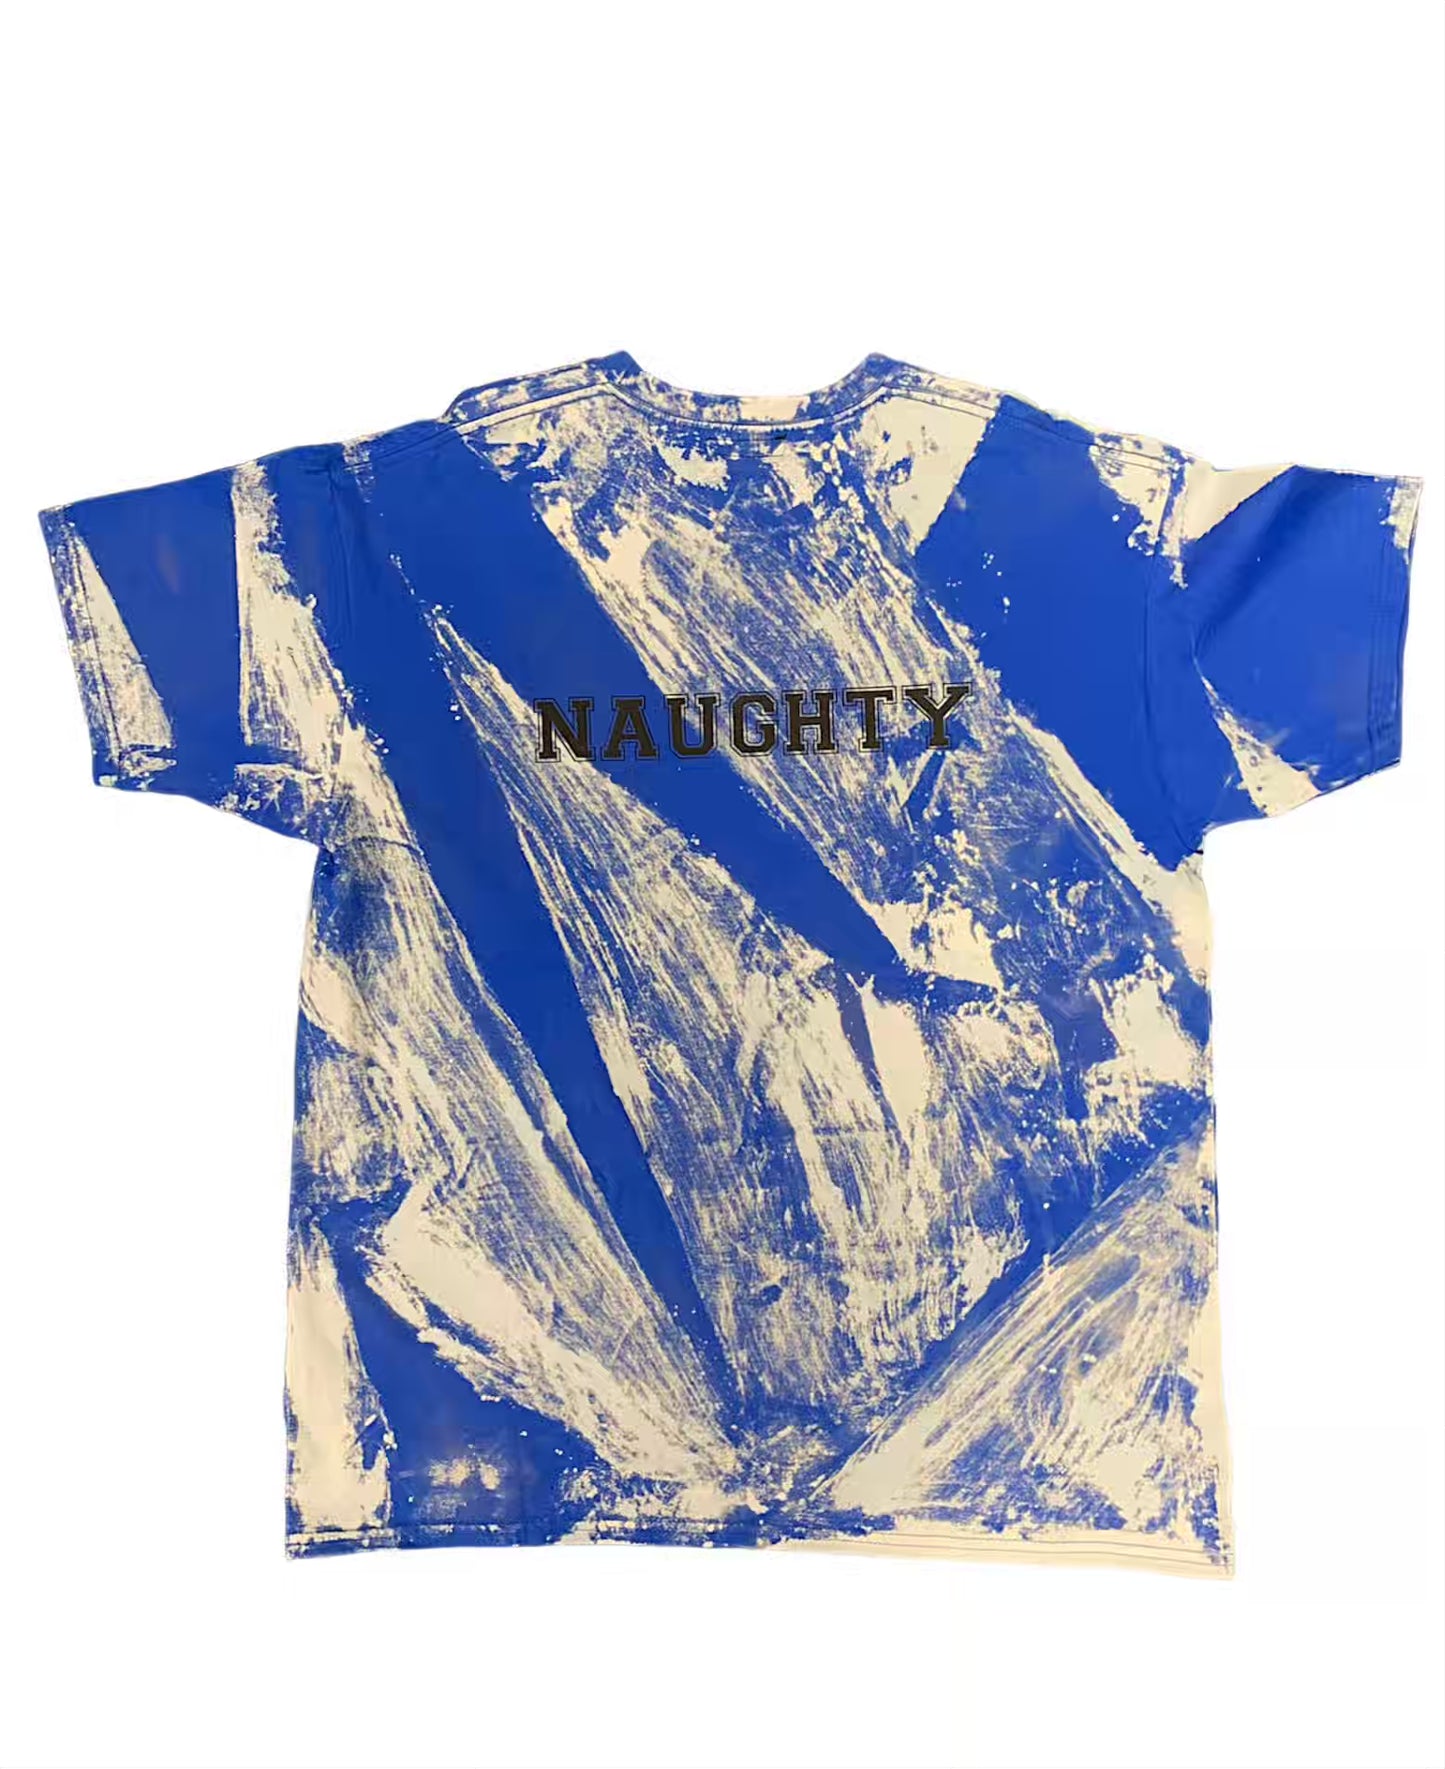 Partxis Blue XL T-shirt